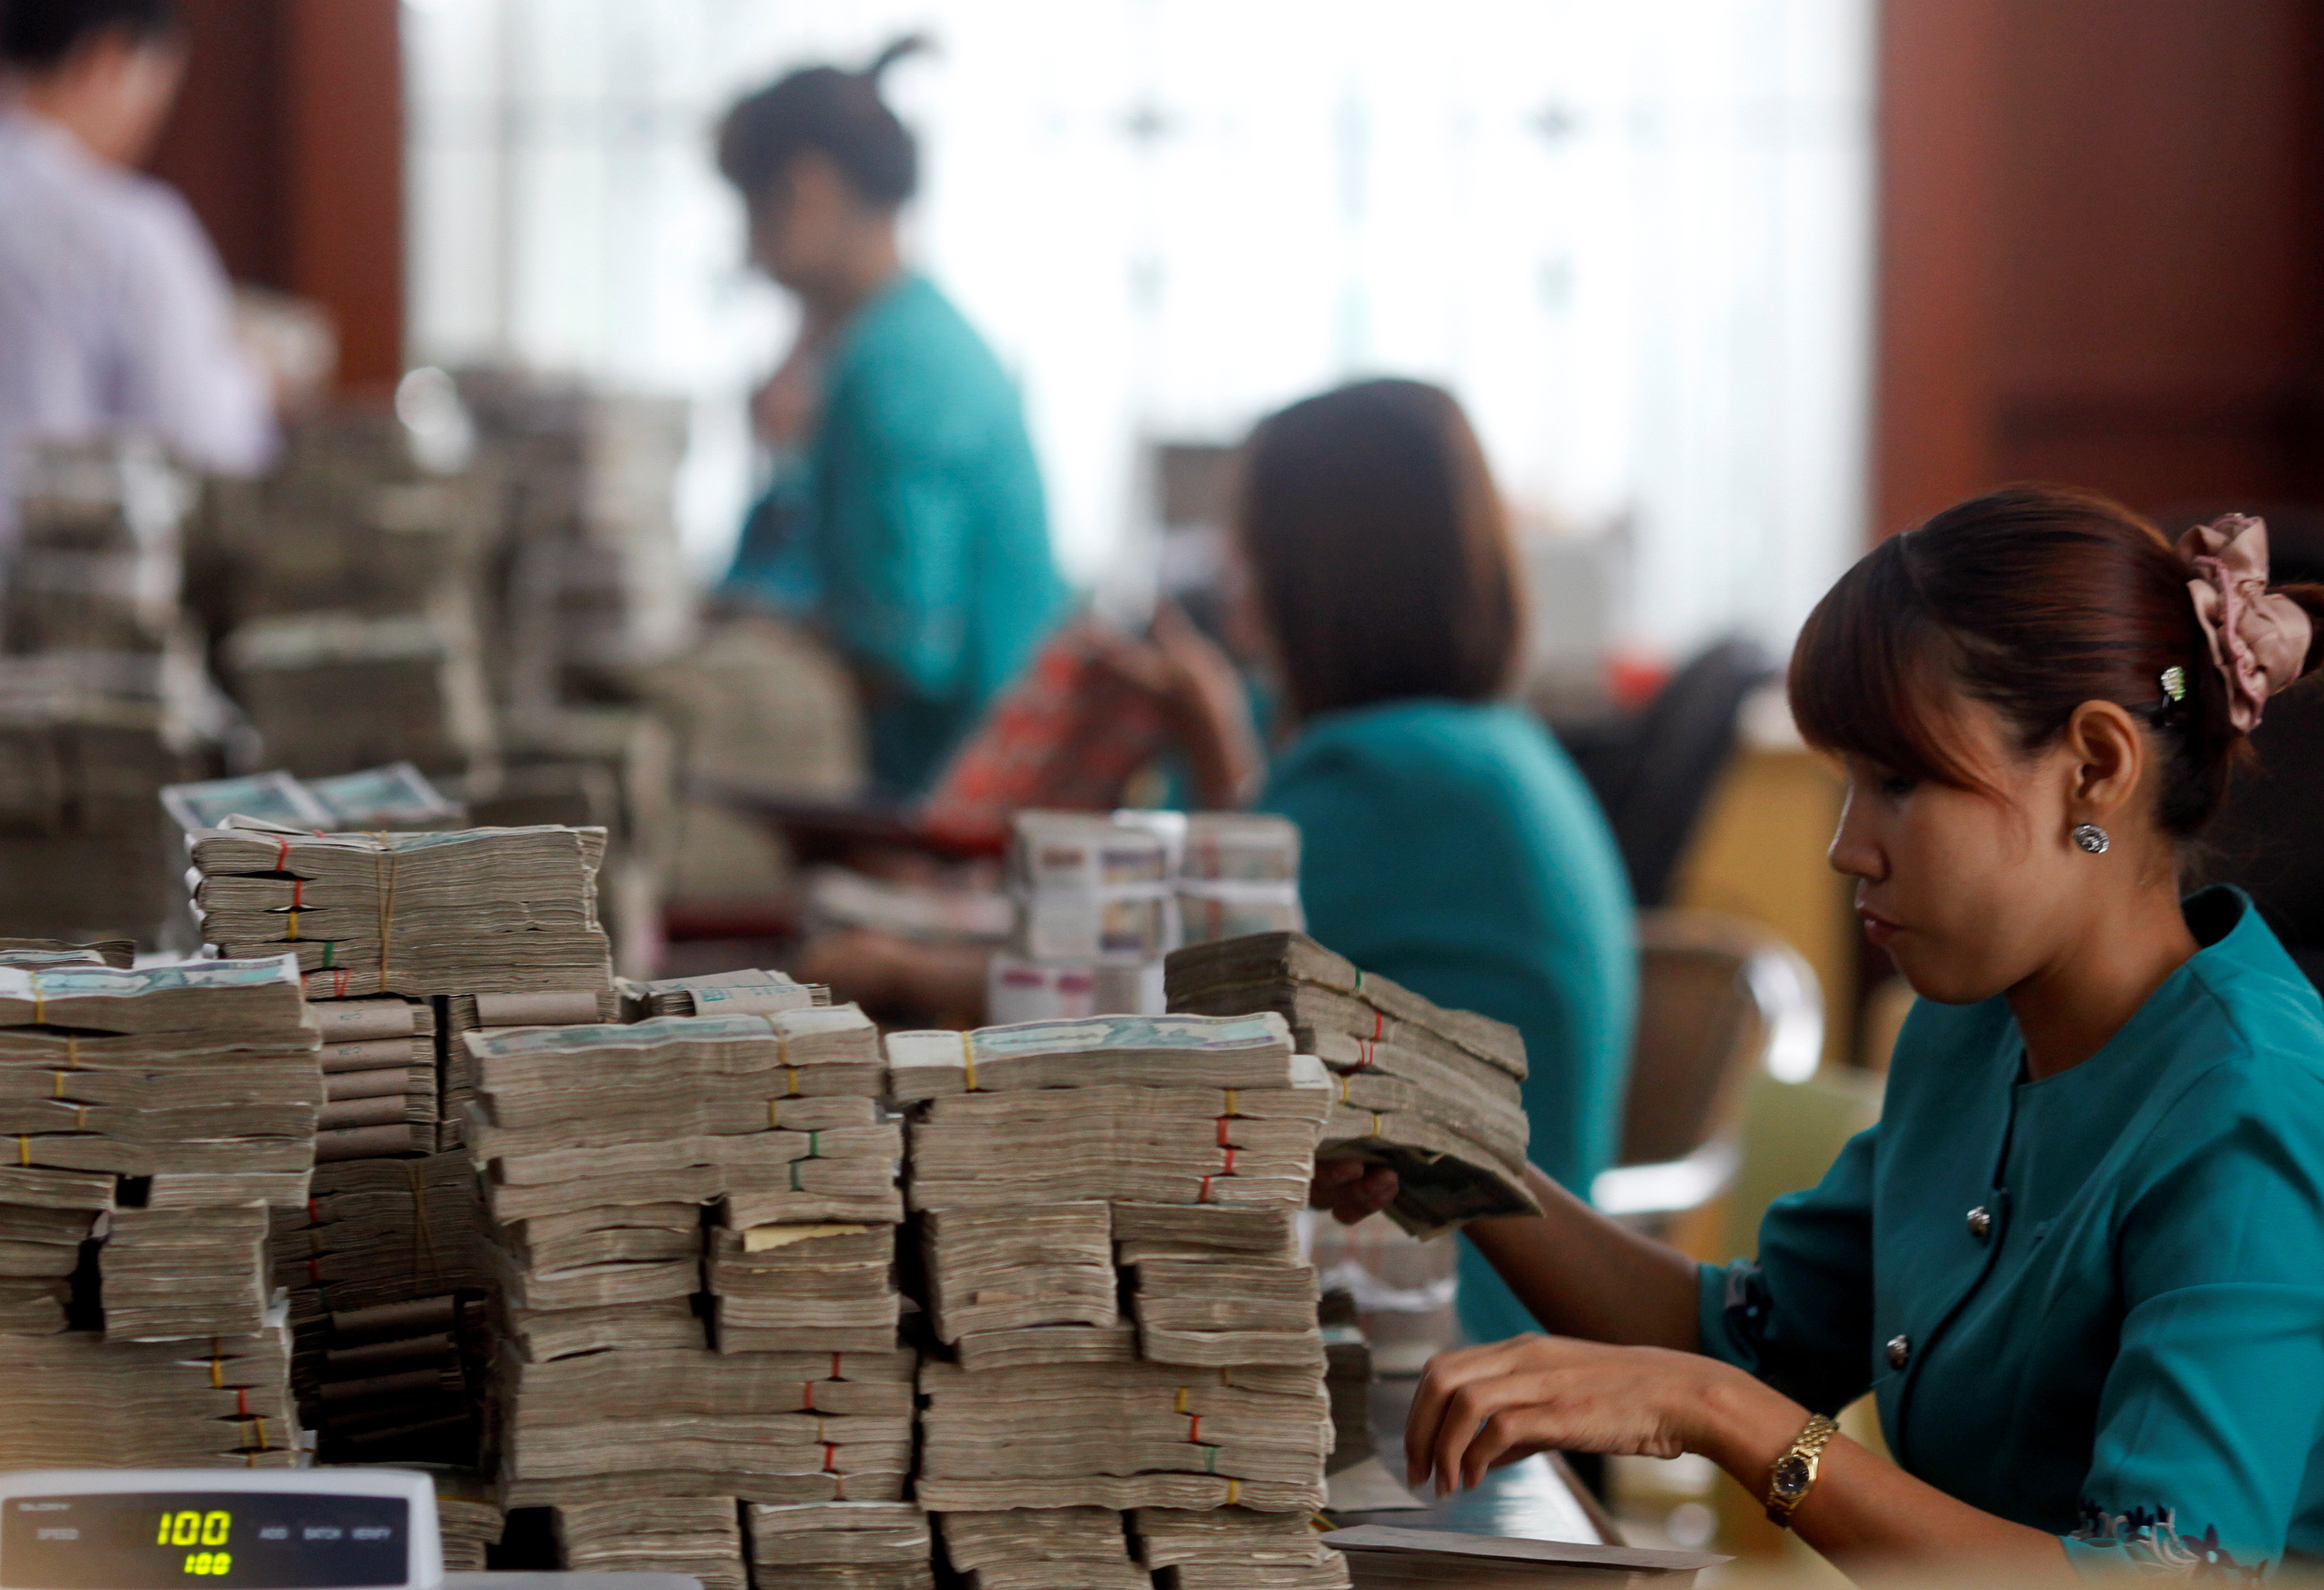 Workers count Myanmar's kyat banknotes at the office of a local bank in Yangon April 2, 2012. REUTERS/Soe Zeya Tun/